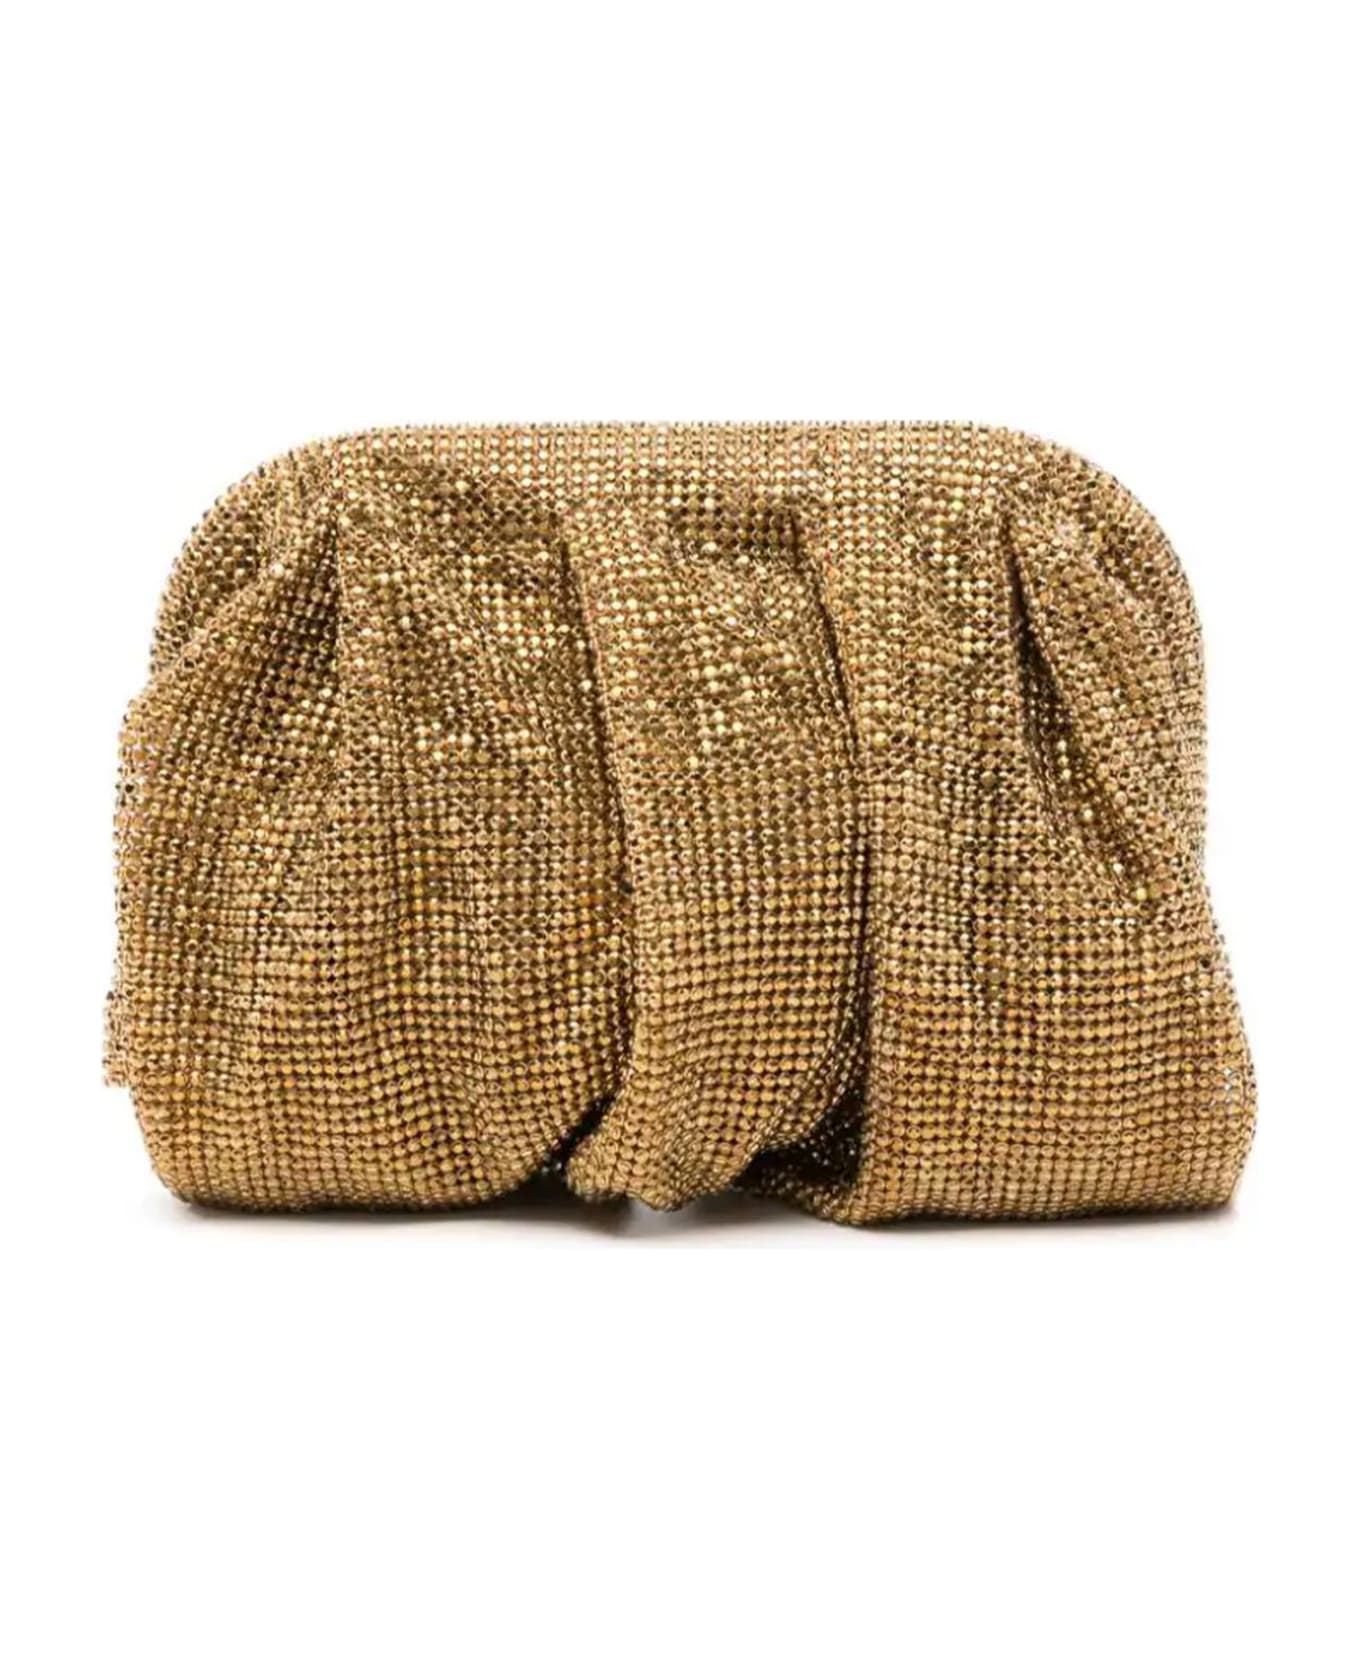 Benedetta Bruzziches Gold-tone Venus Petite Crystal Clutch Bag - Golden クラッチバッグ